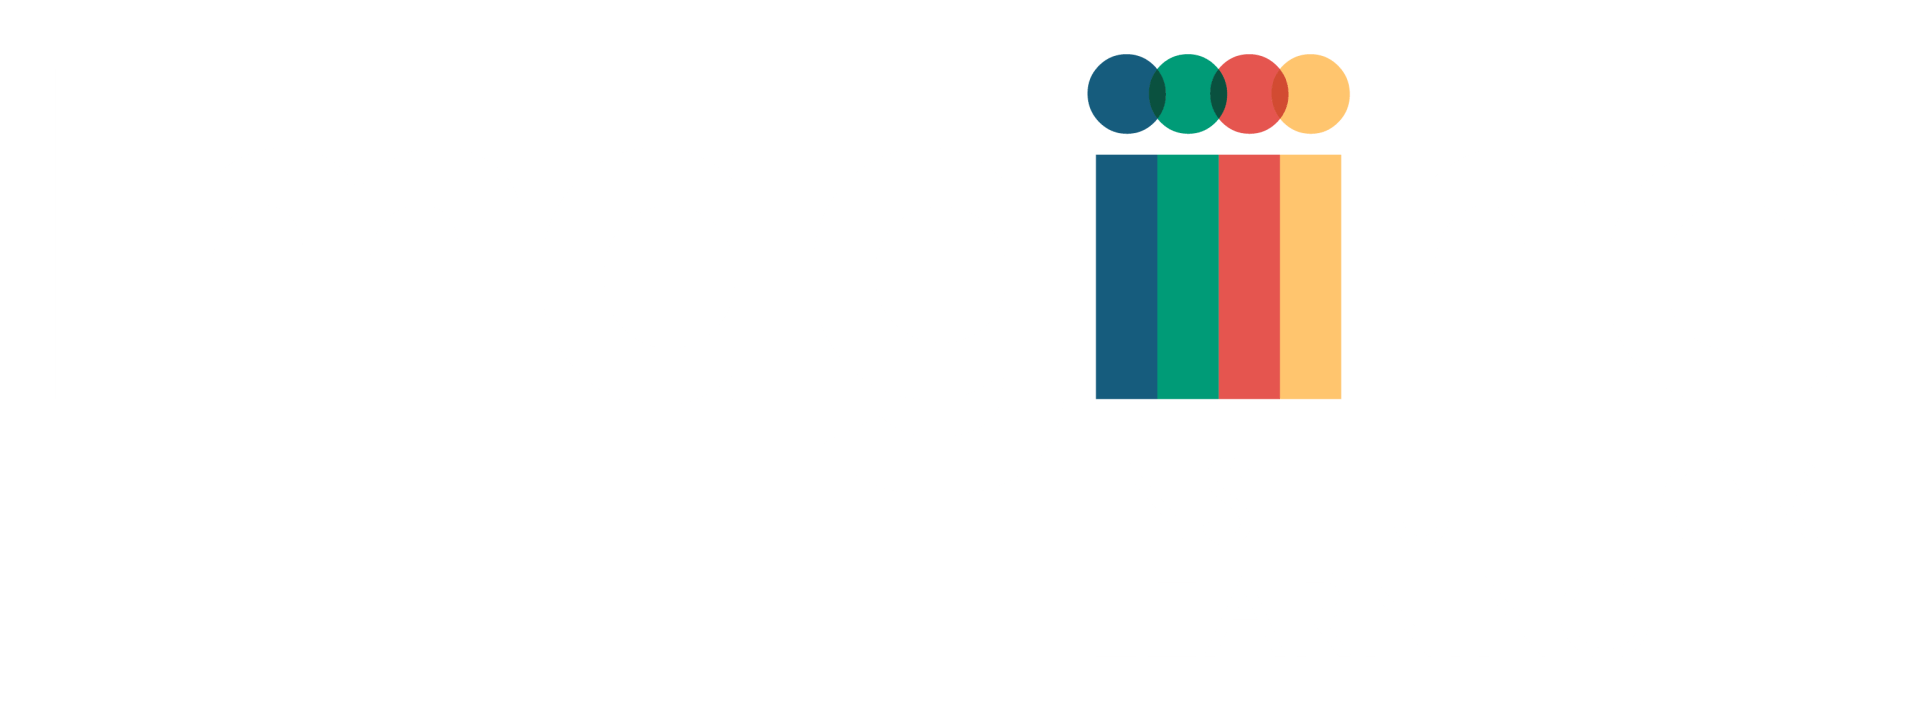 Imagine Institute for Learning